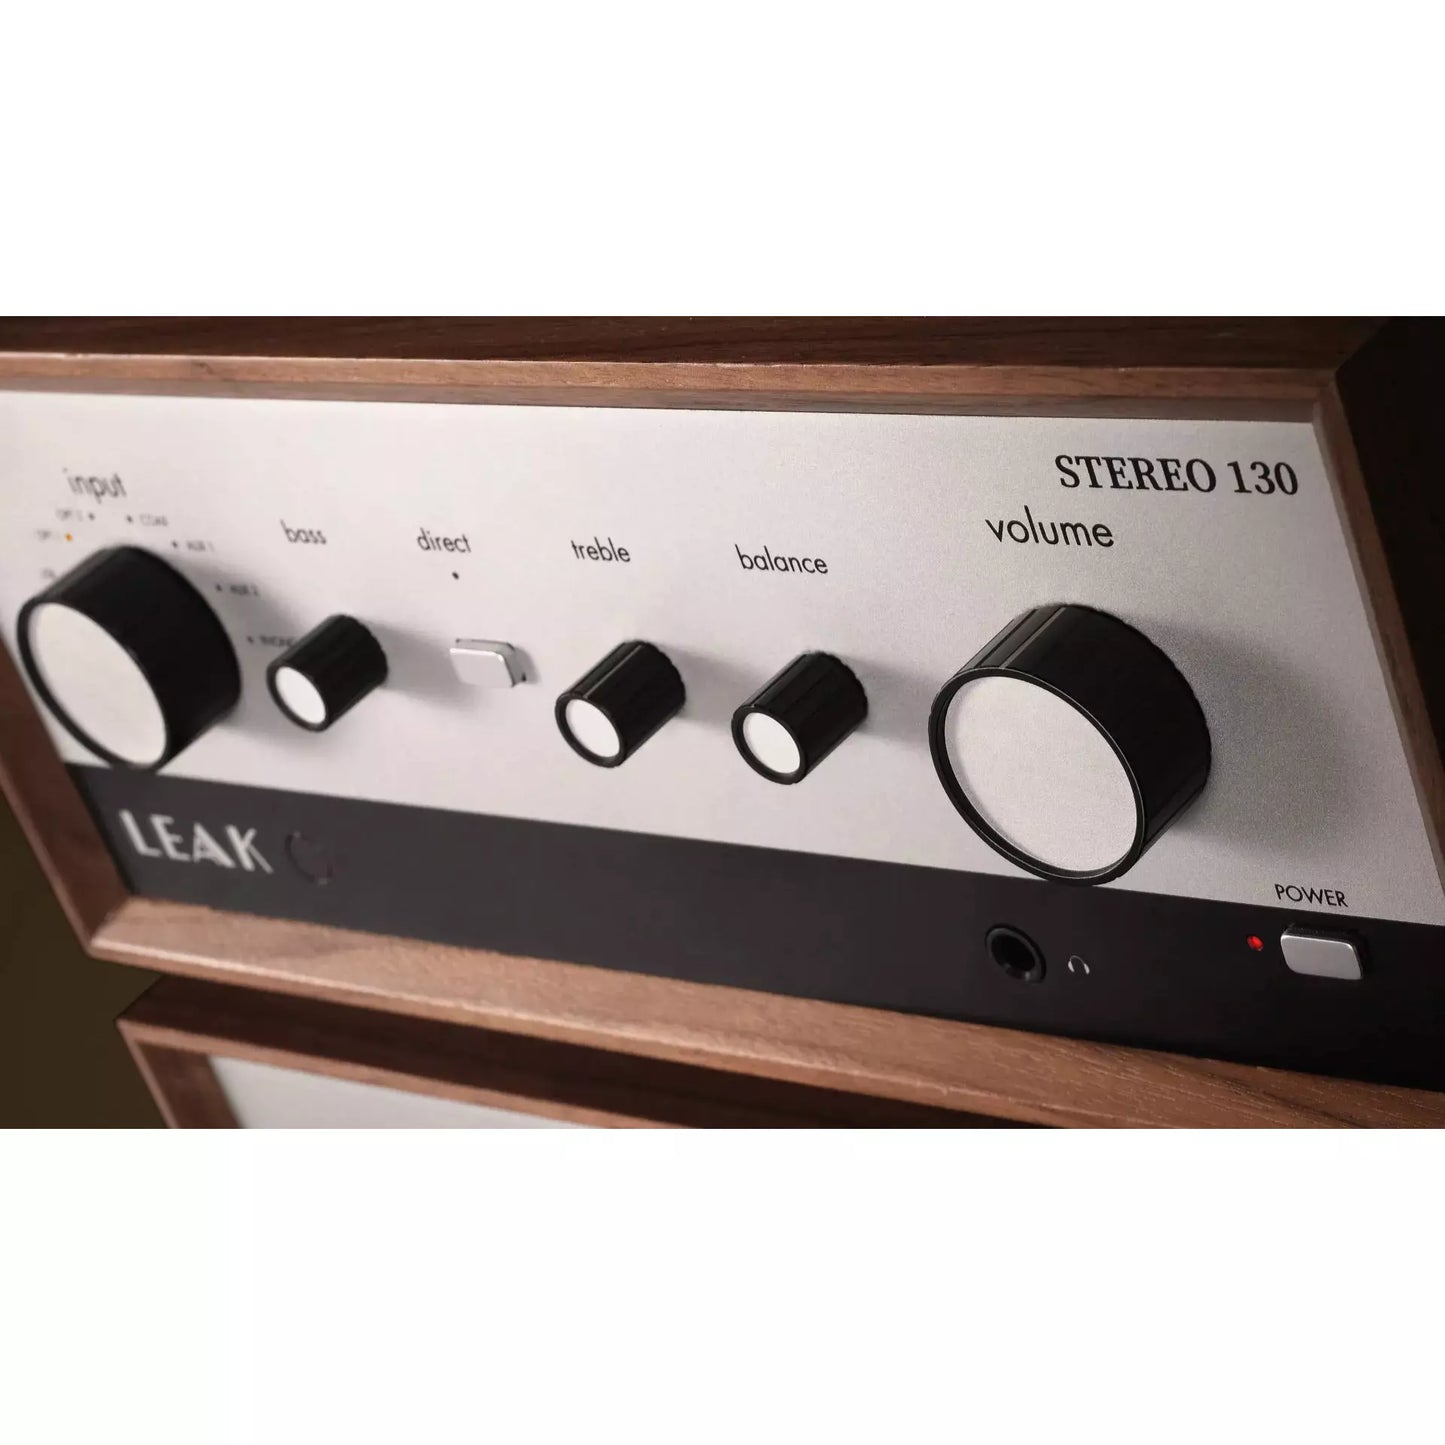 Leak - Stereo 130 Integrated Amplifier